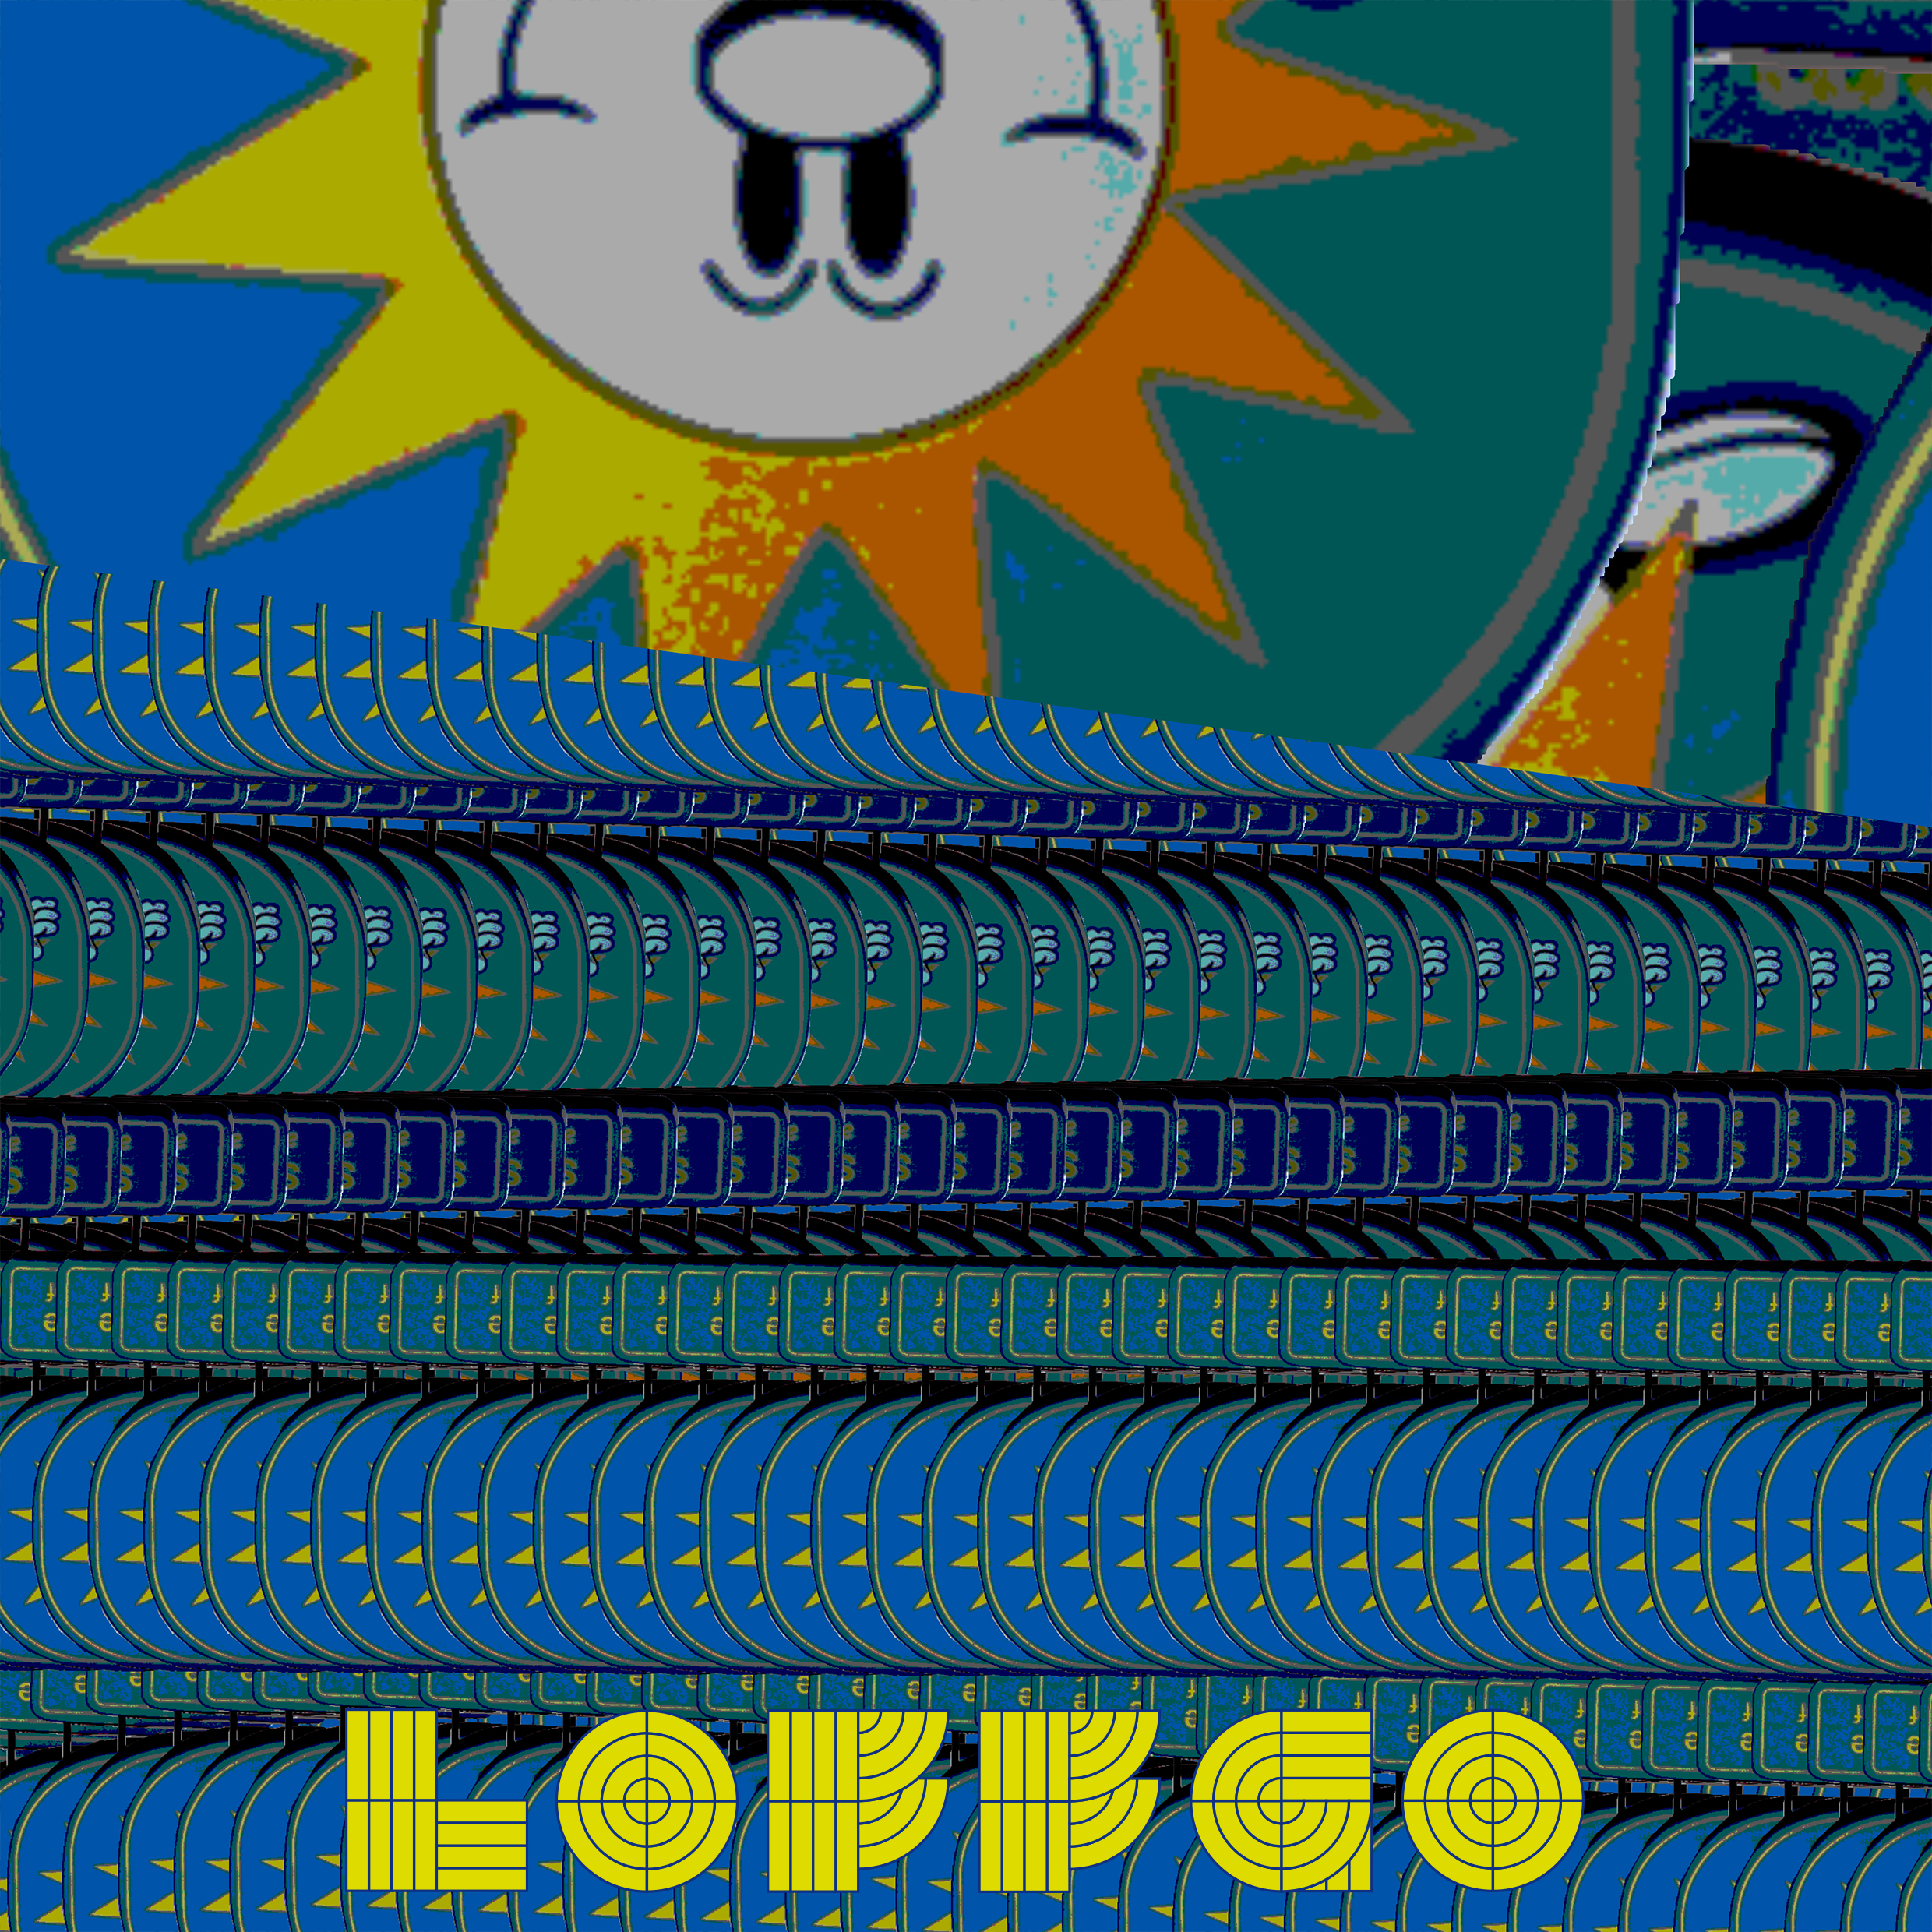 loffgo logo collage by Sarah Stendel Graphic Design